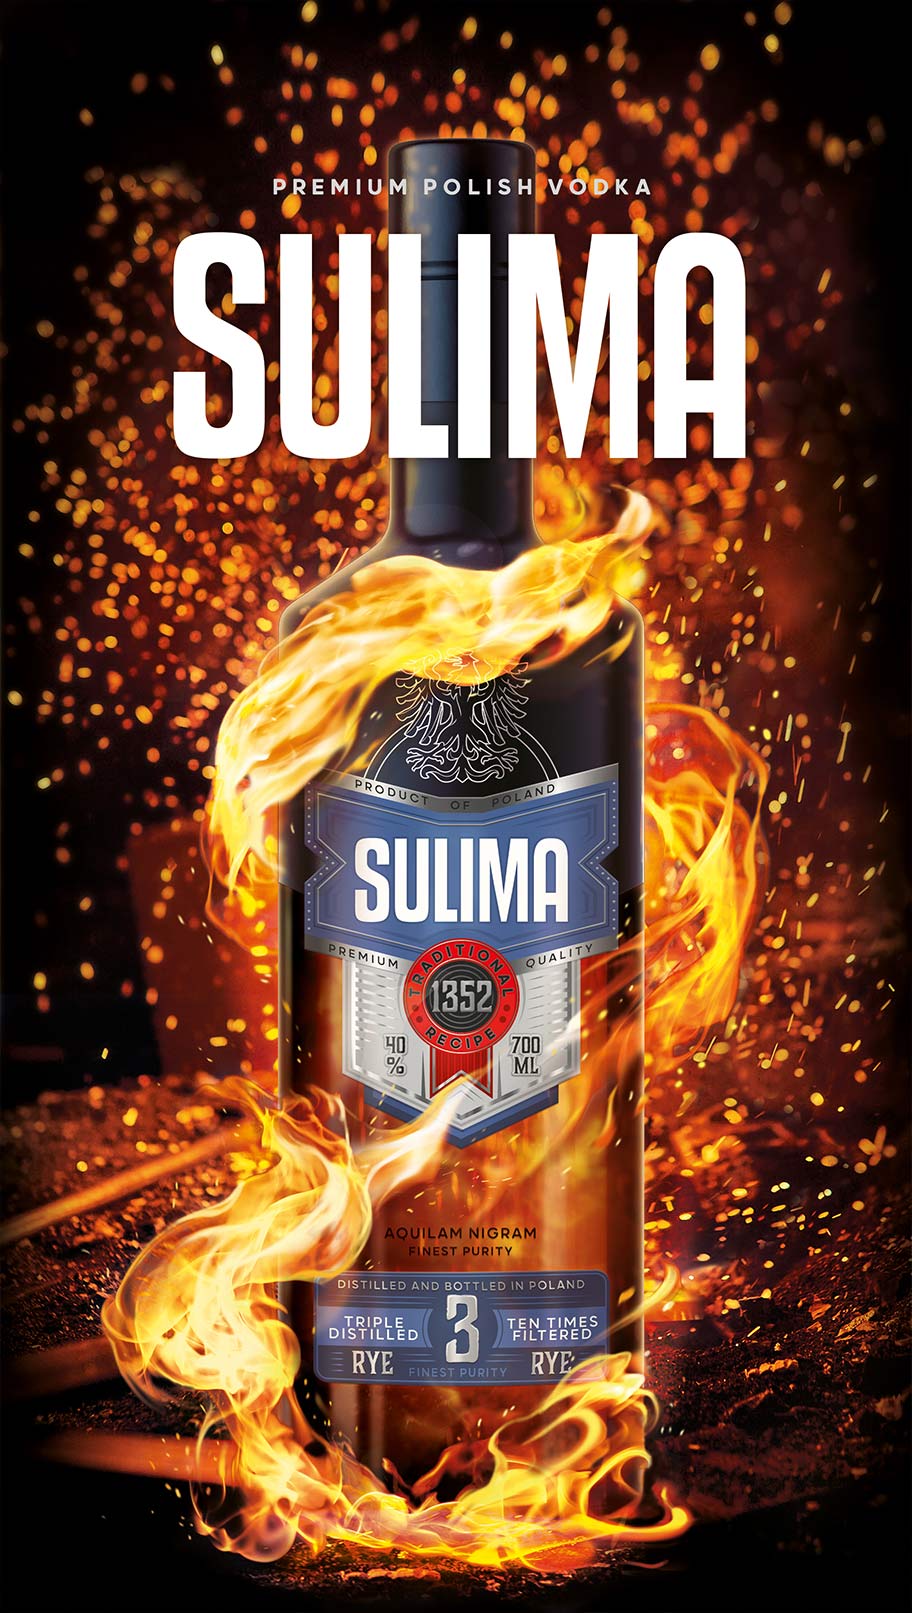 https://tictactoe.studio/app/uploads/2023/02/sulima-projektowanie-etykiet-wodka.jpg